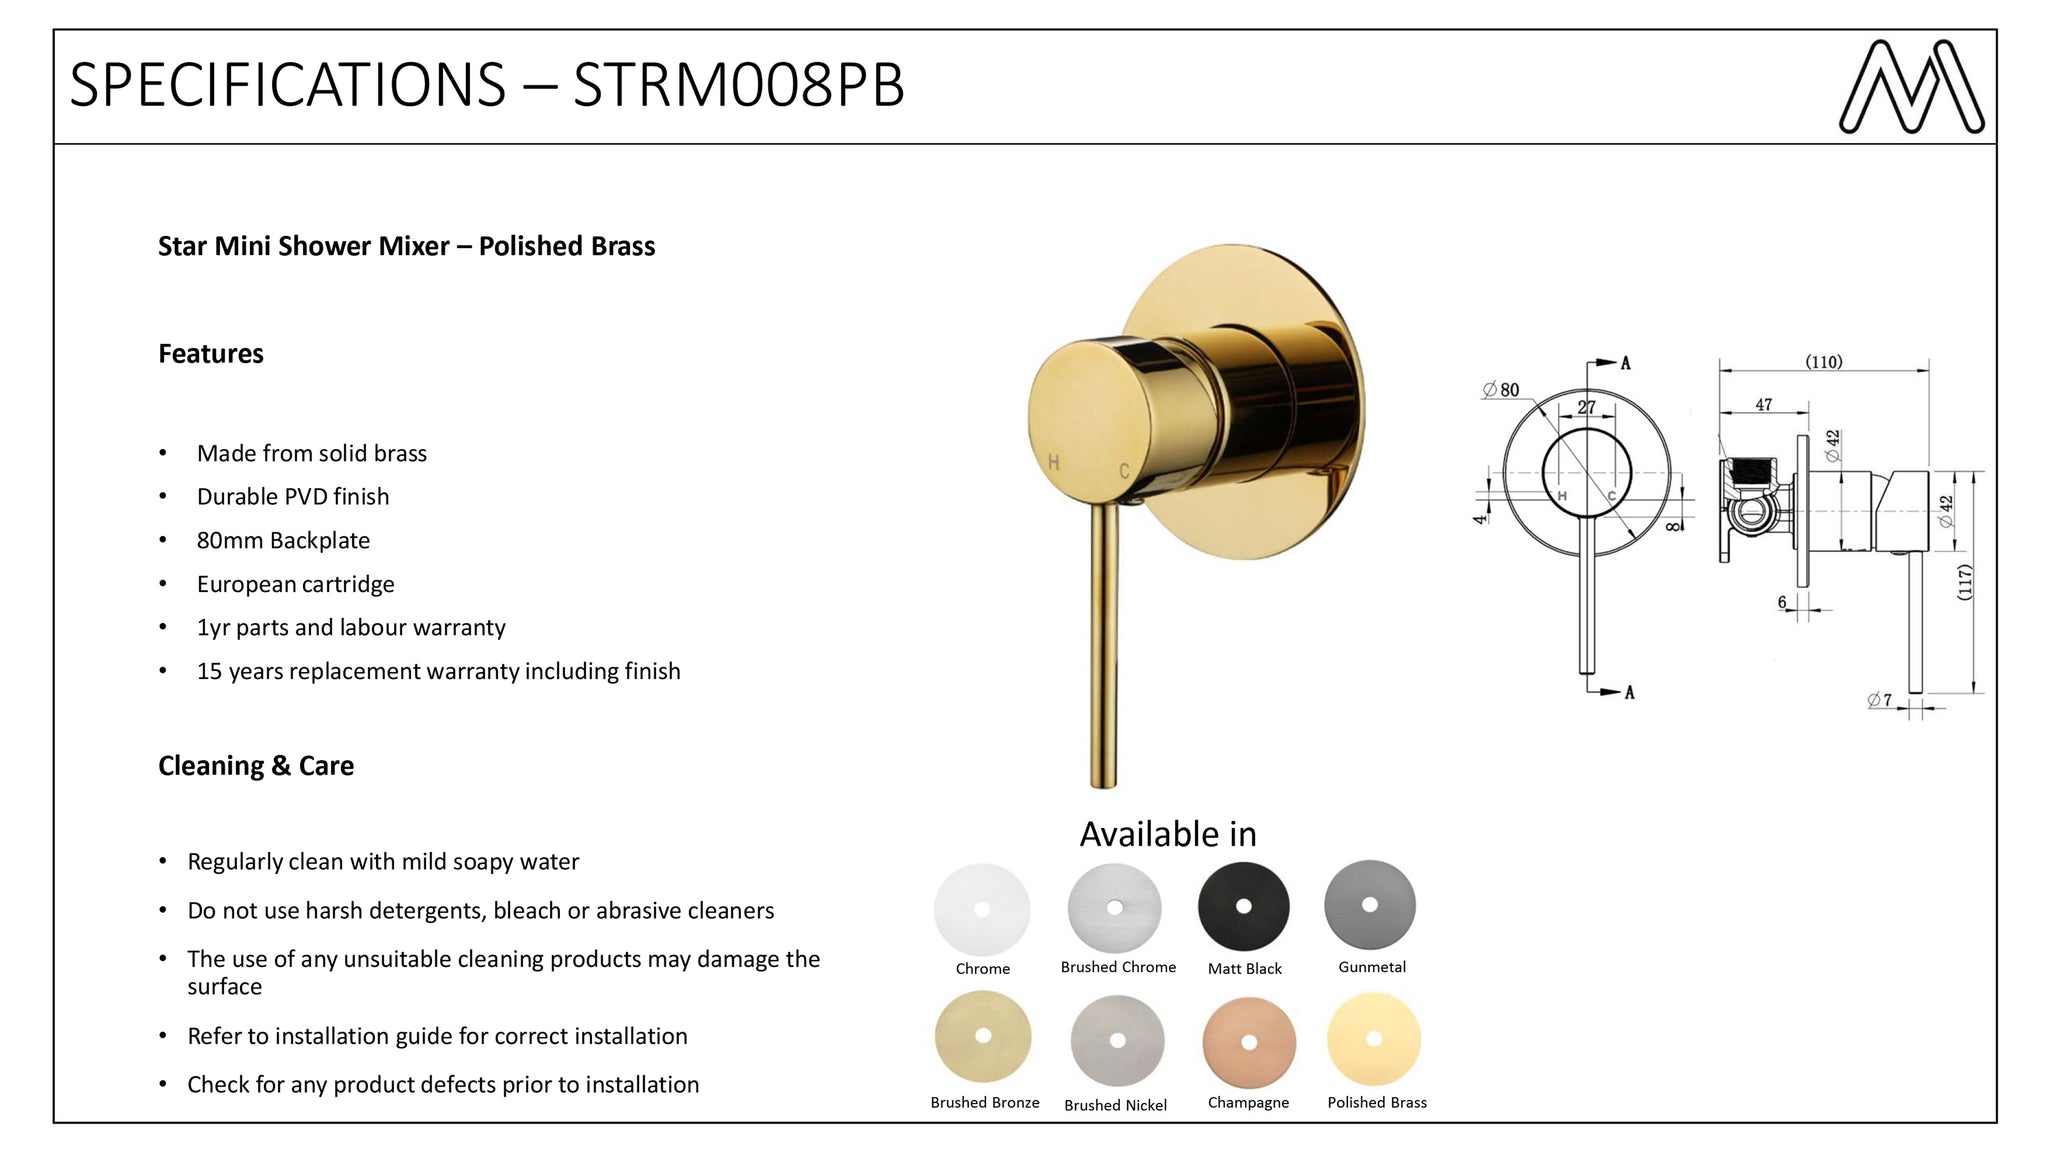 Star Mini Shower Mixer – Polished Brass